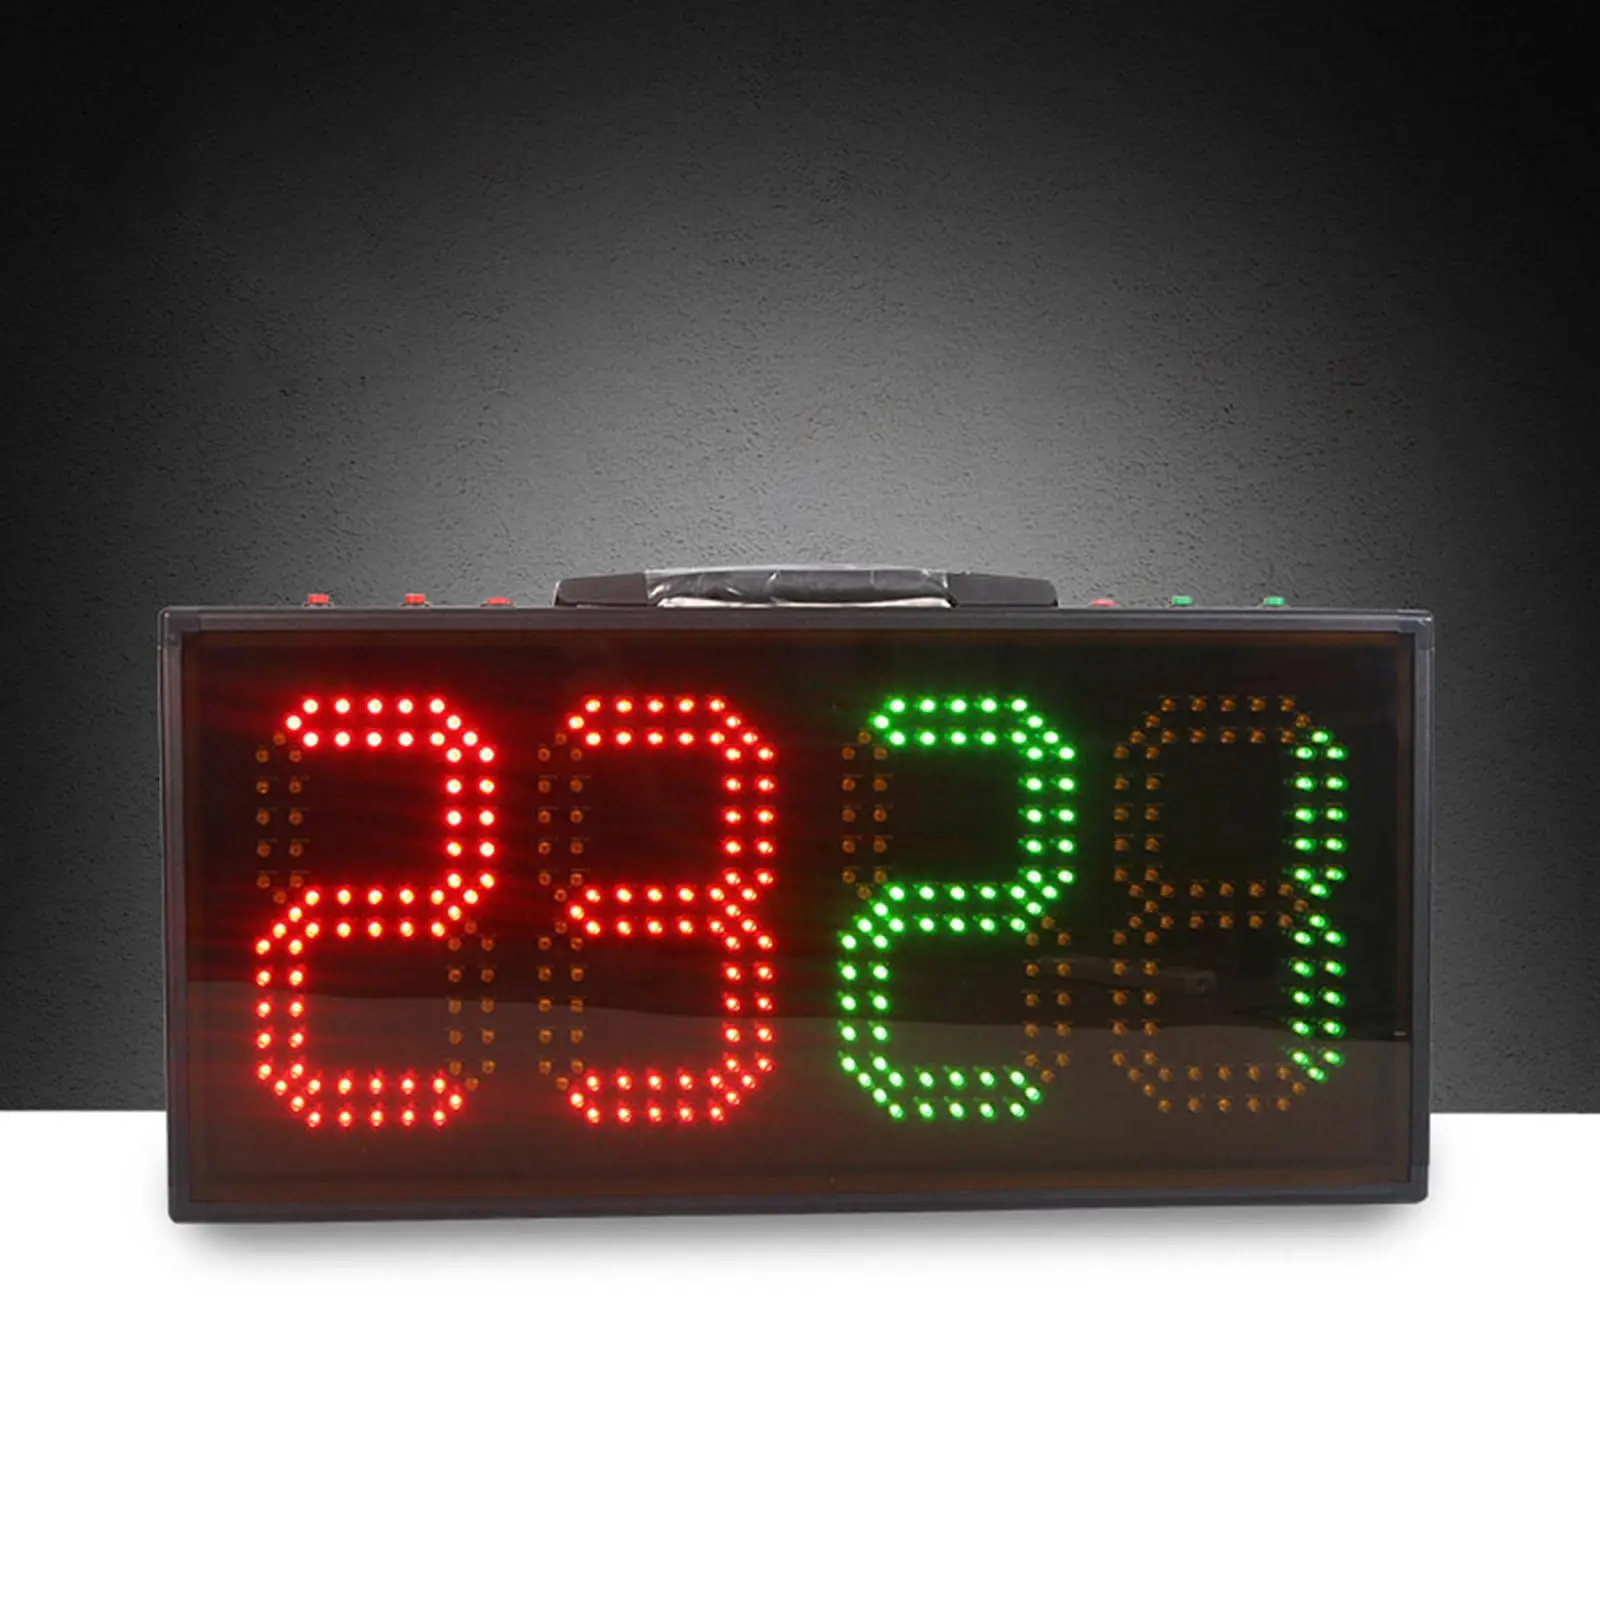 Portable Digital Scoreboard Electric LED Score Board Score Keeper Indoor Basketball Scoreboard for Team Games Volleyball Tennis